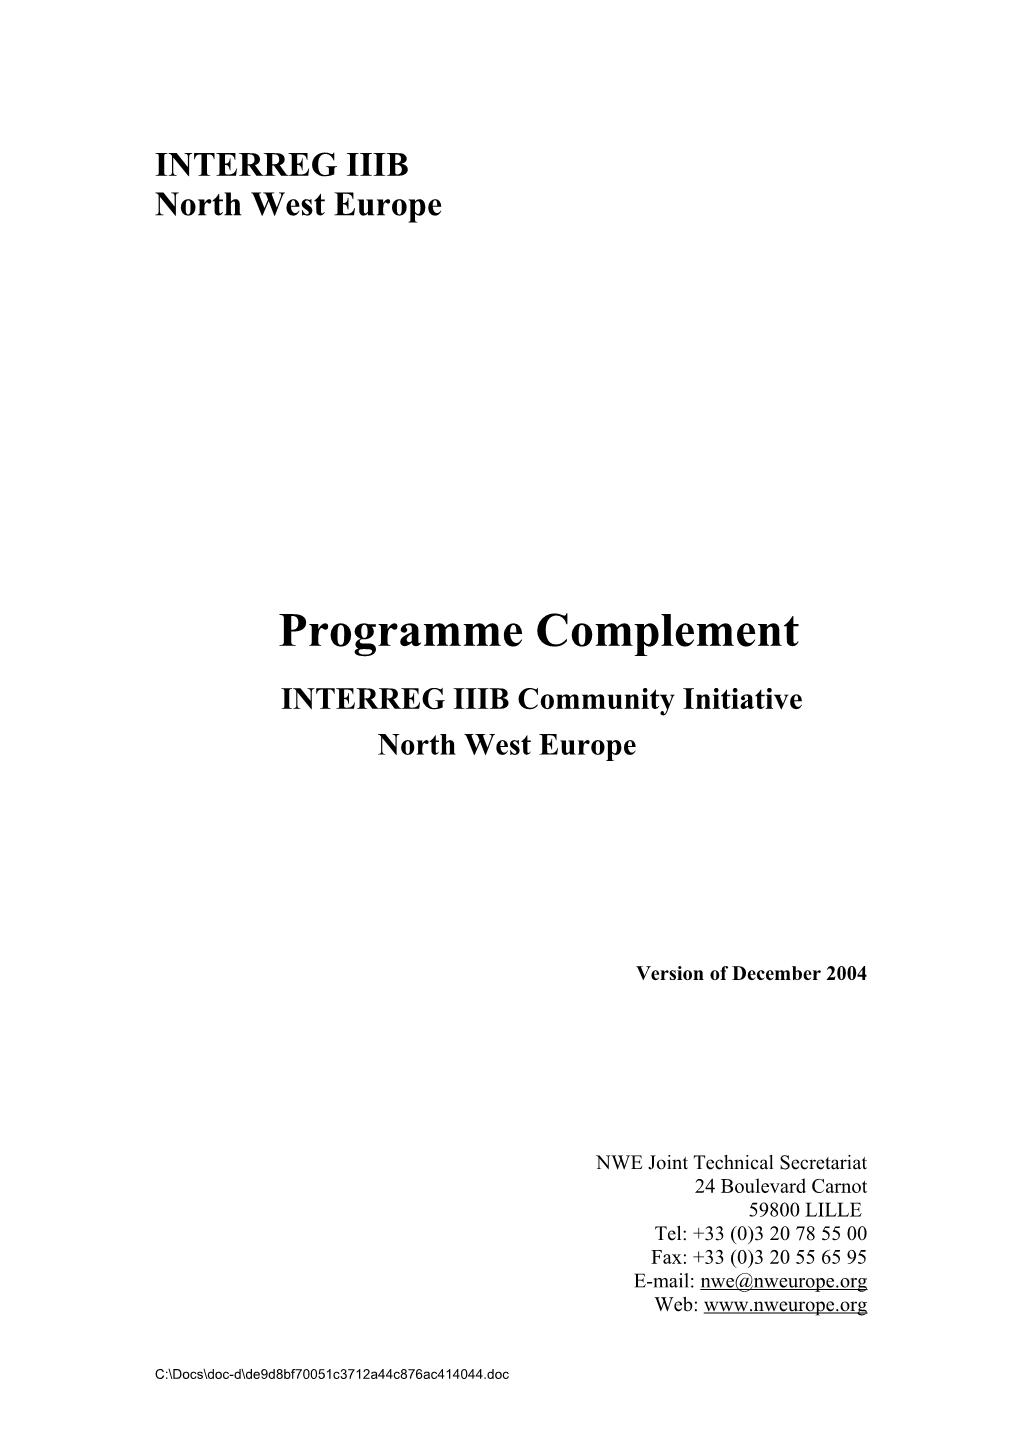 INTERREG IIIB Community Initiative